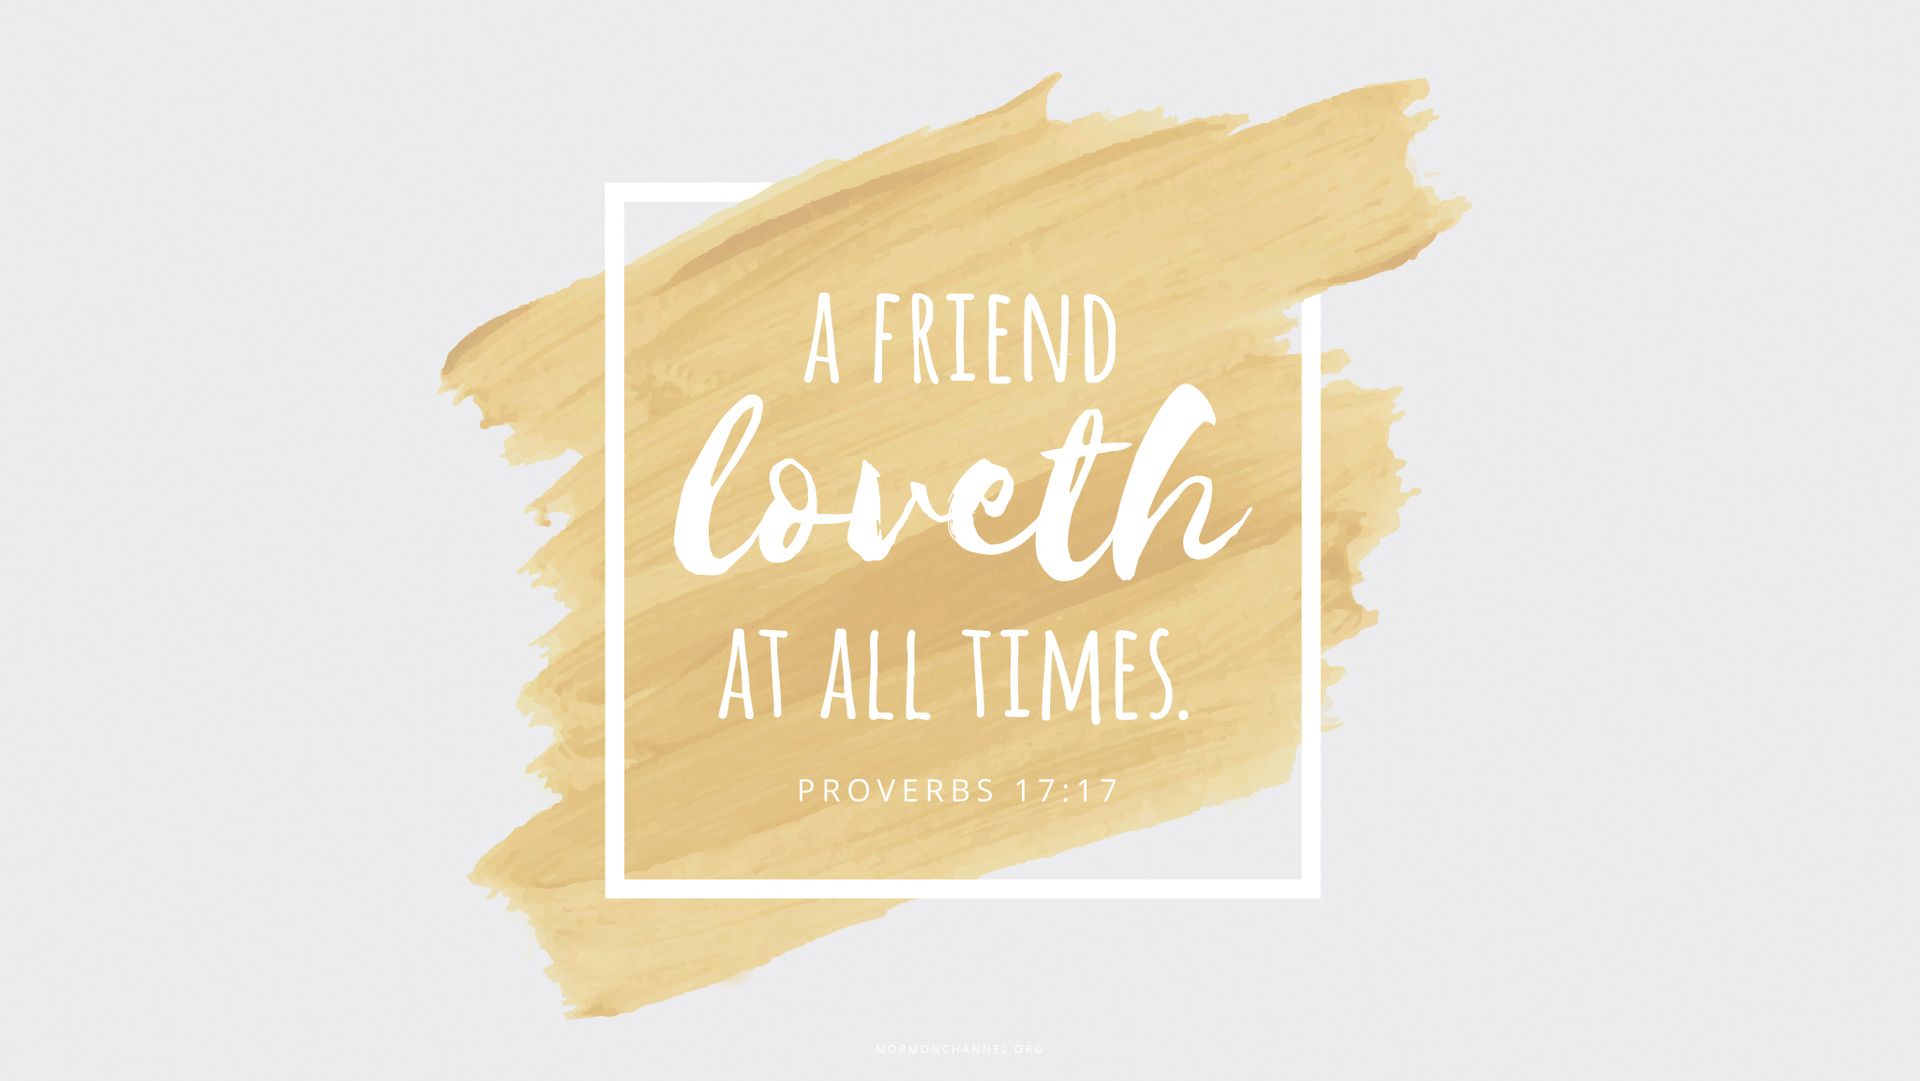 “A friend loveth at all times.”—Proverbs 17:17